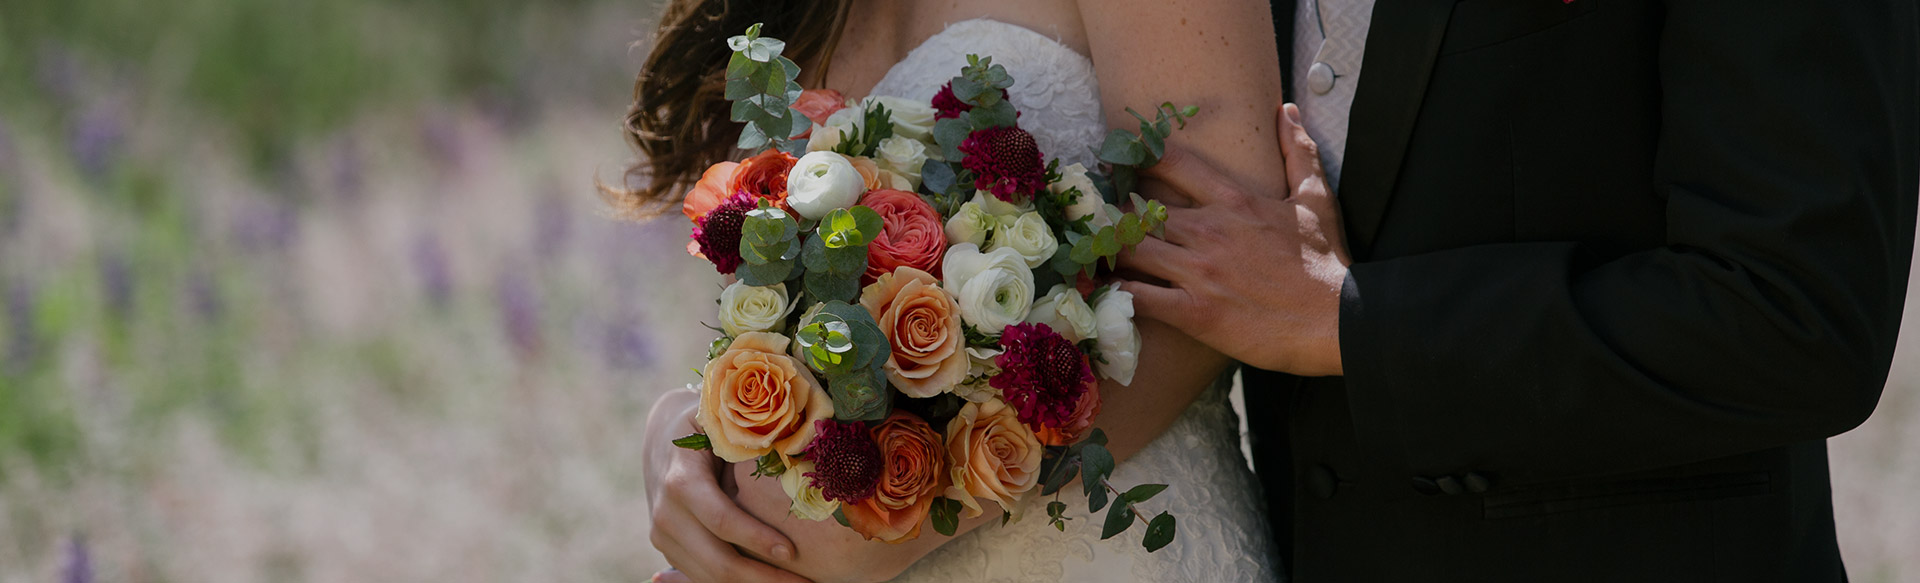 diy-wedding-flowers-bouquet.jpg